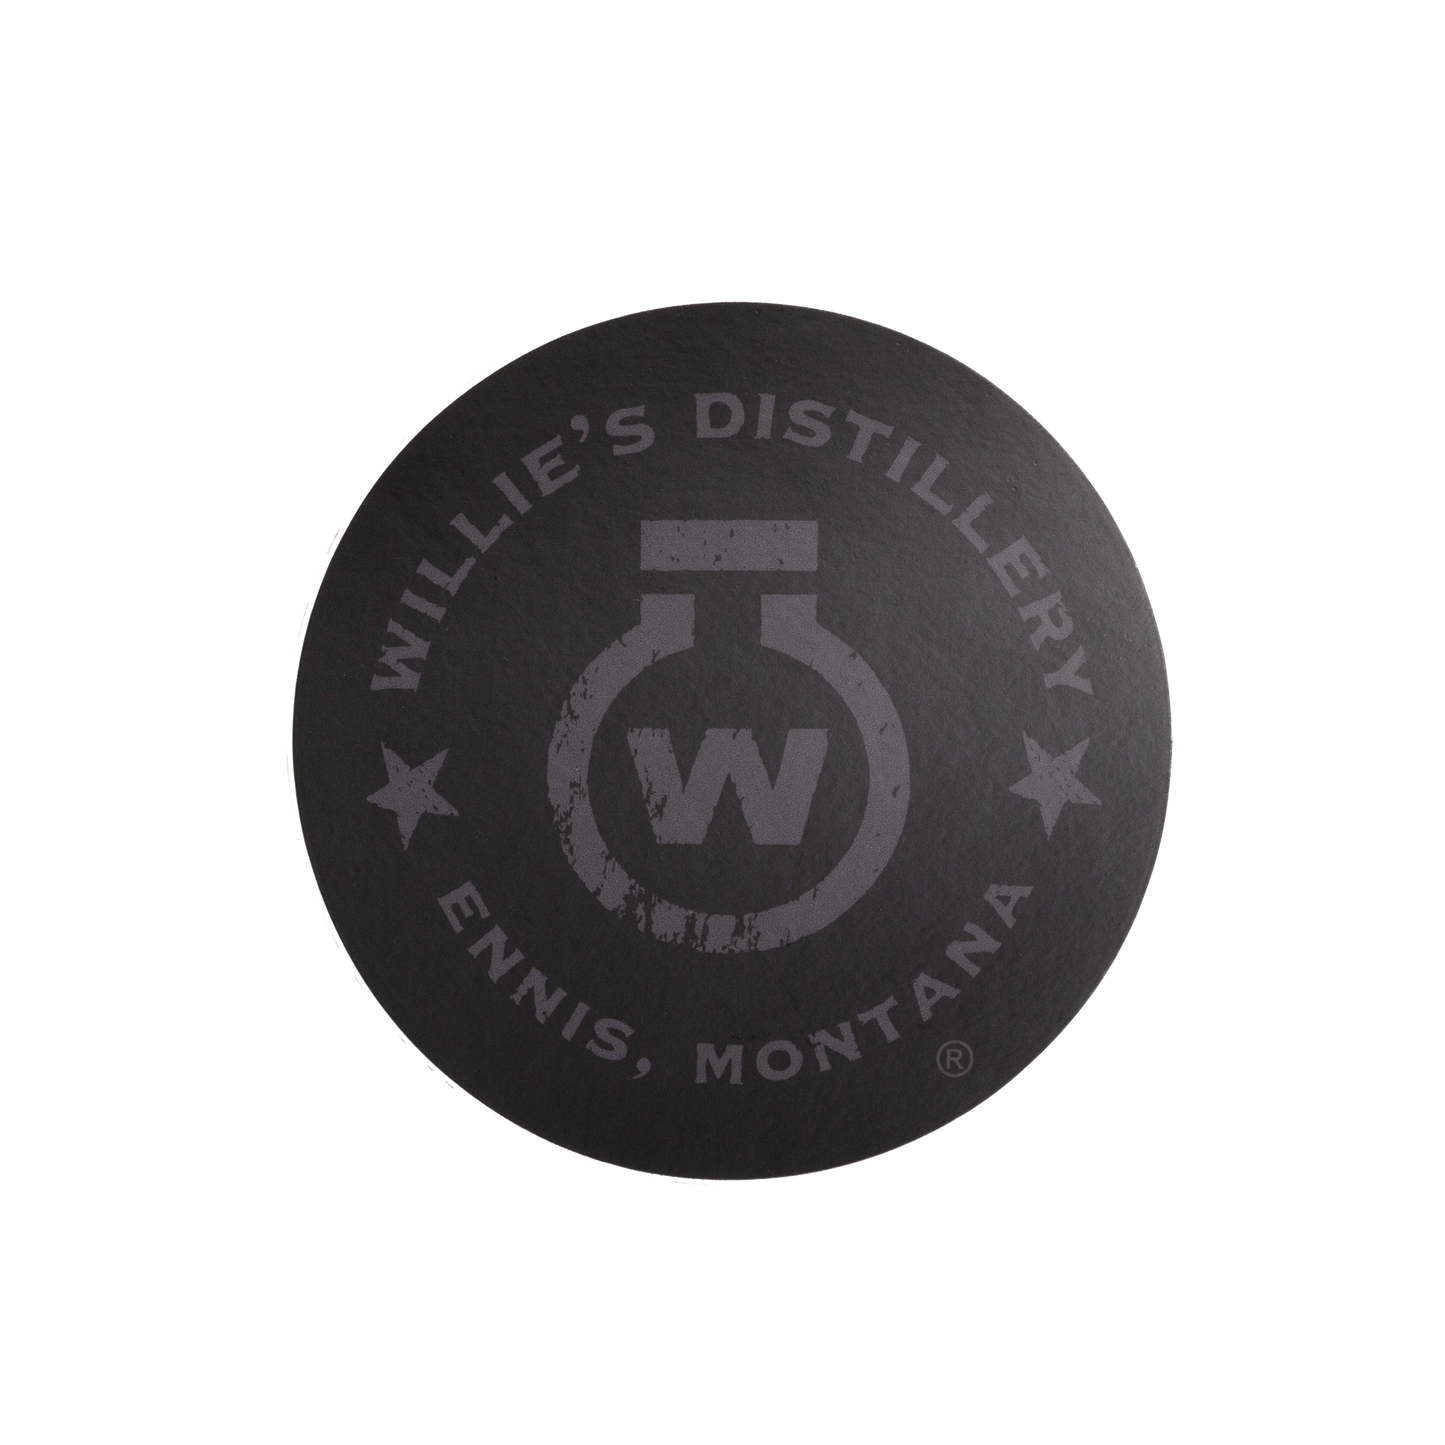 Willie's Distillery Shiny Vinyl Stickers